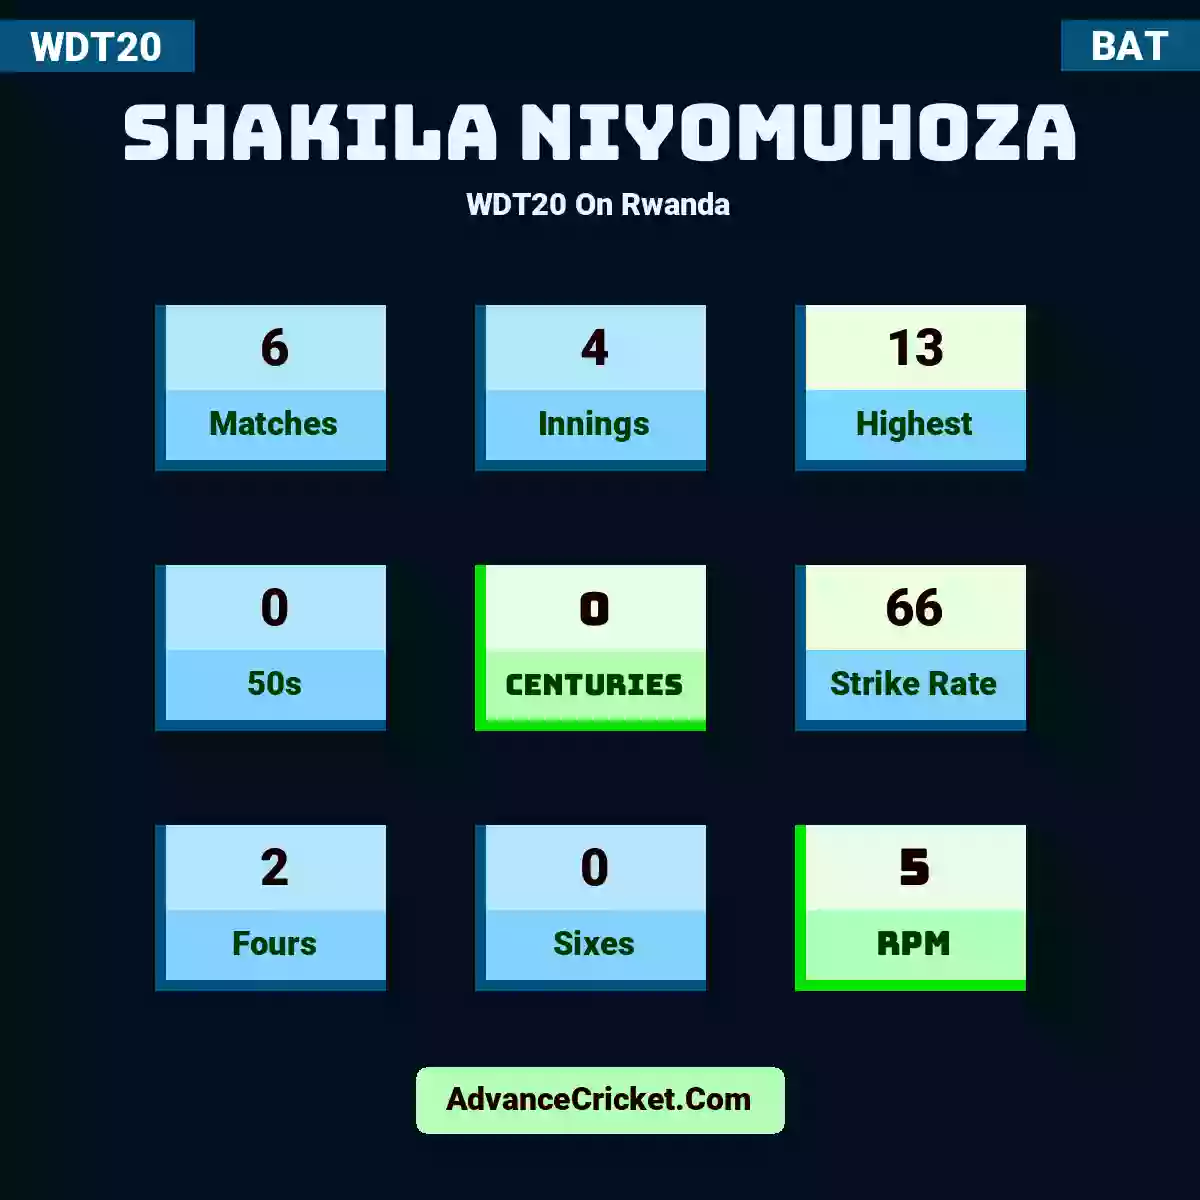 Shakila Niyomuhoza WDT20  On Rwanda, Shakila Niyomuhoza played 6 matches, scored 13 runs as highest, 0 half-centuries, and 0 centuries, with a strike rate of 66. S.Niyomuhoza hit 2 fours and 0 sixes, with an RPM of 5.